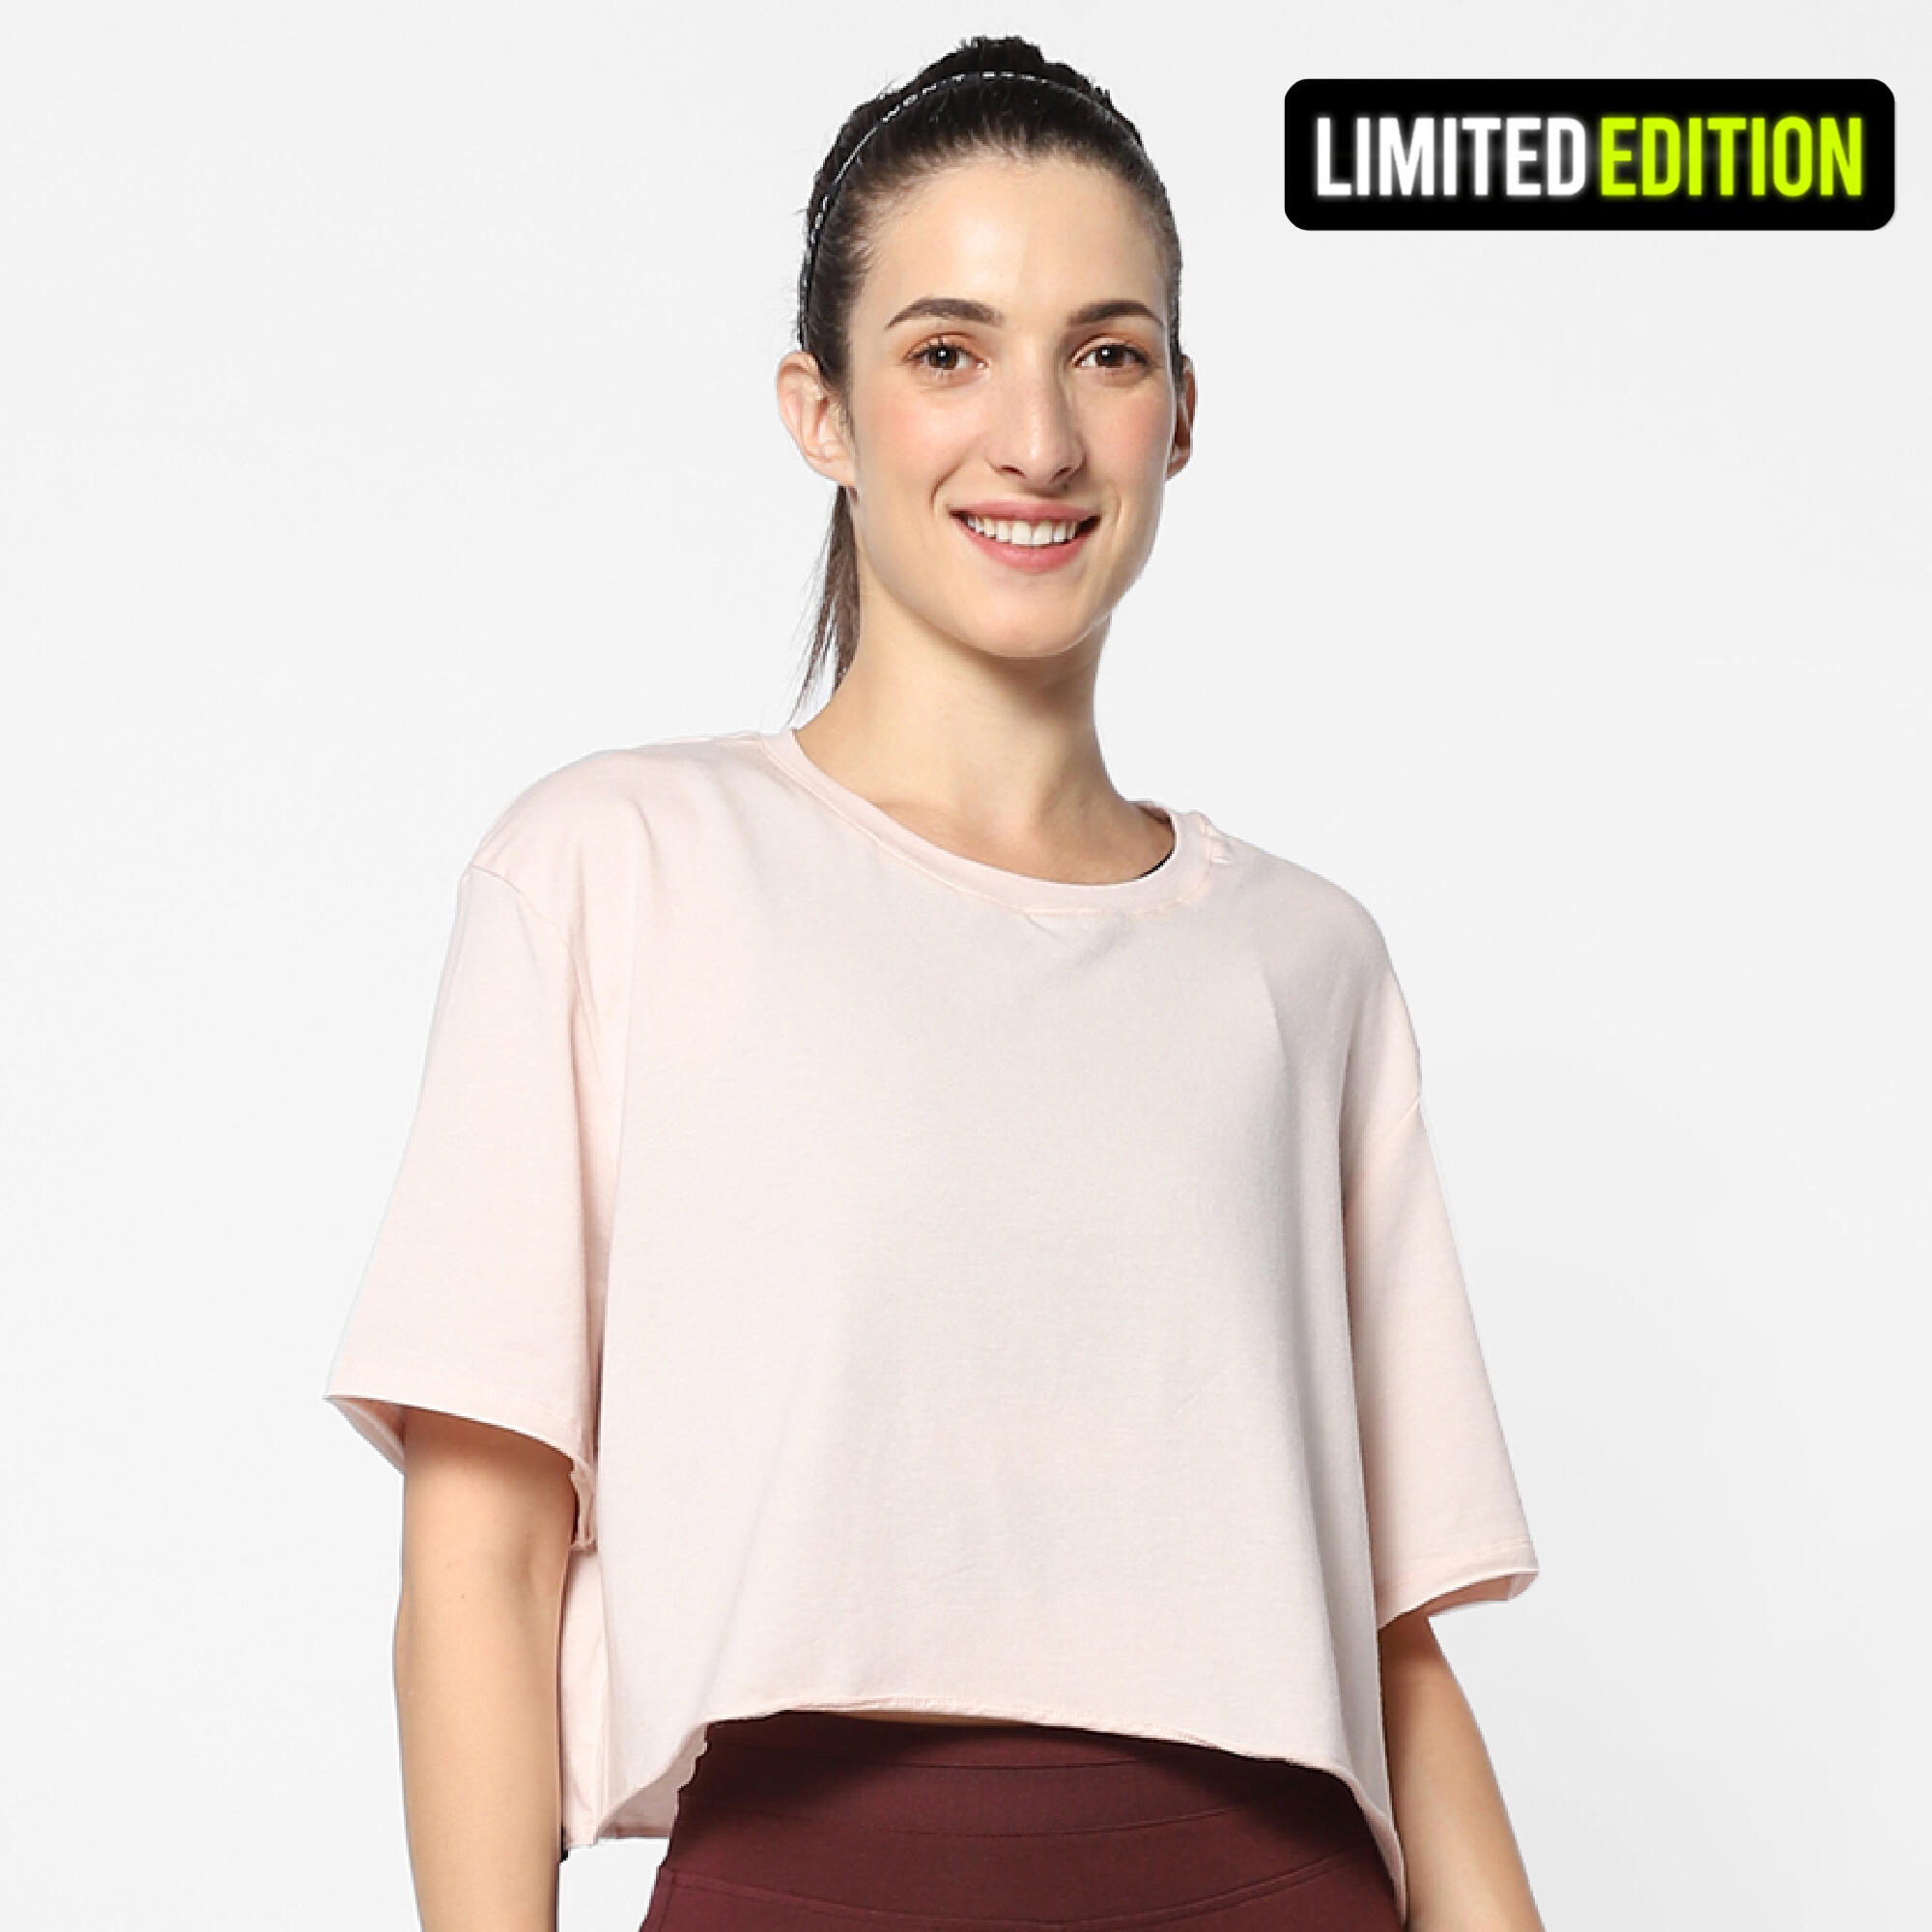 DOMYOS Women's Cropped Fitness T-Shirt 520 - Quartz Pink